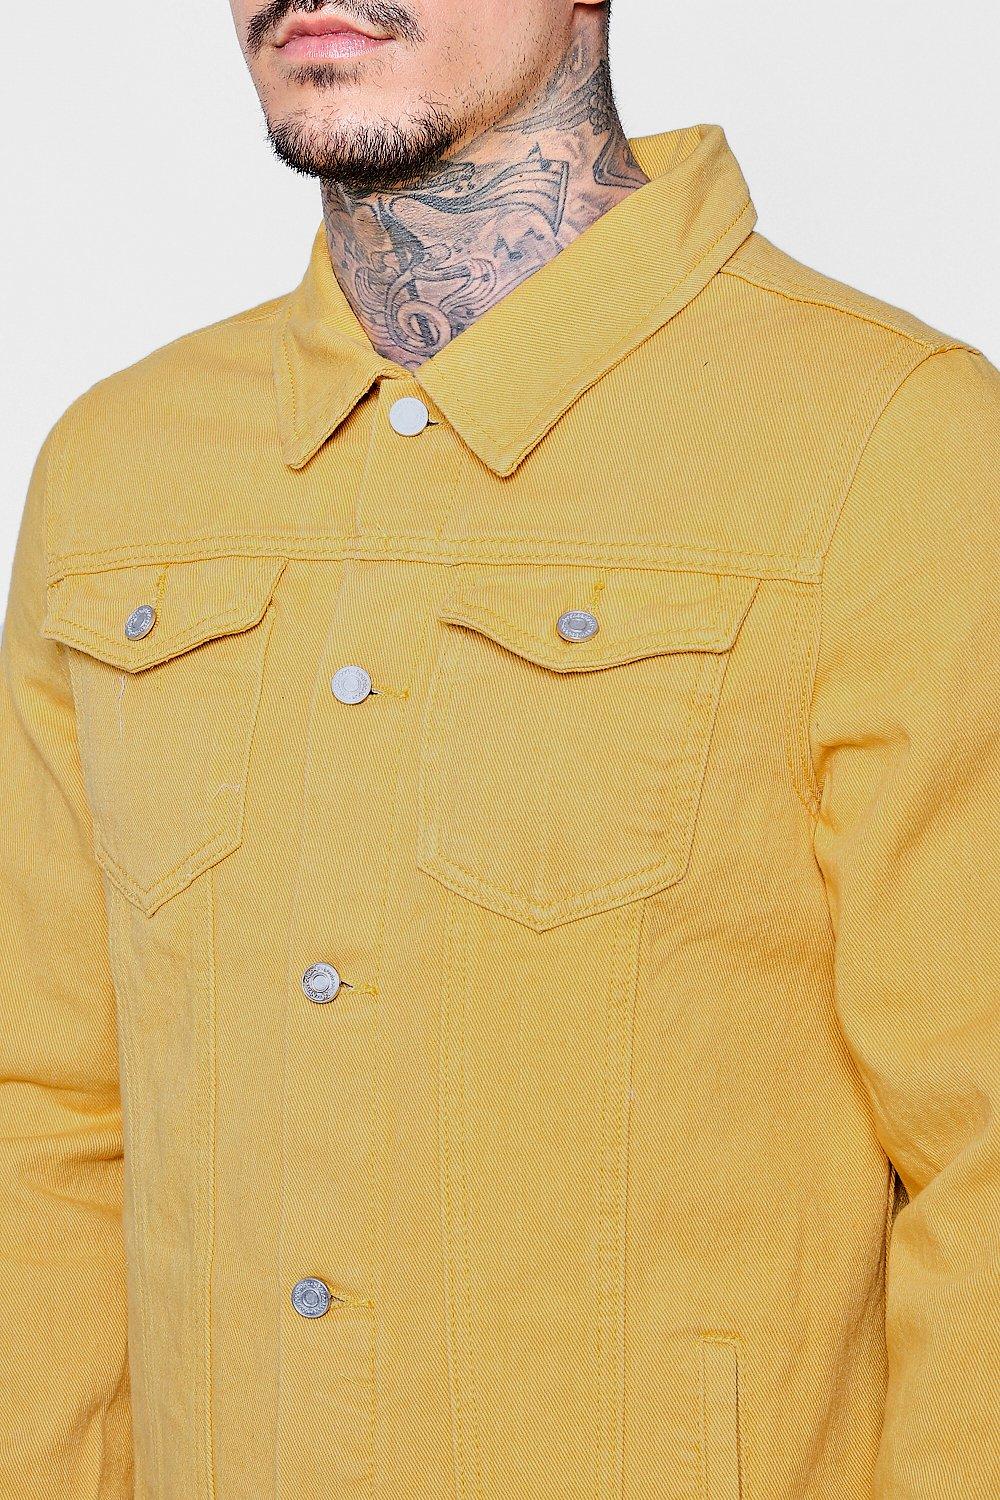 yellow trucker jacket